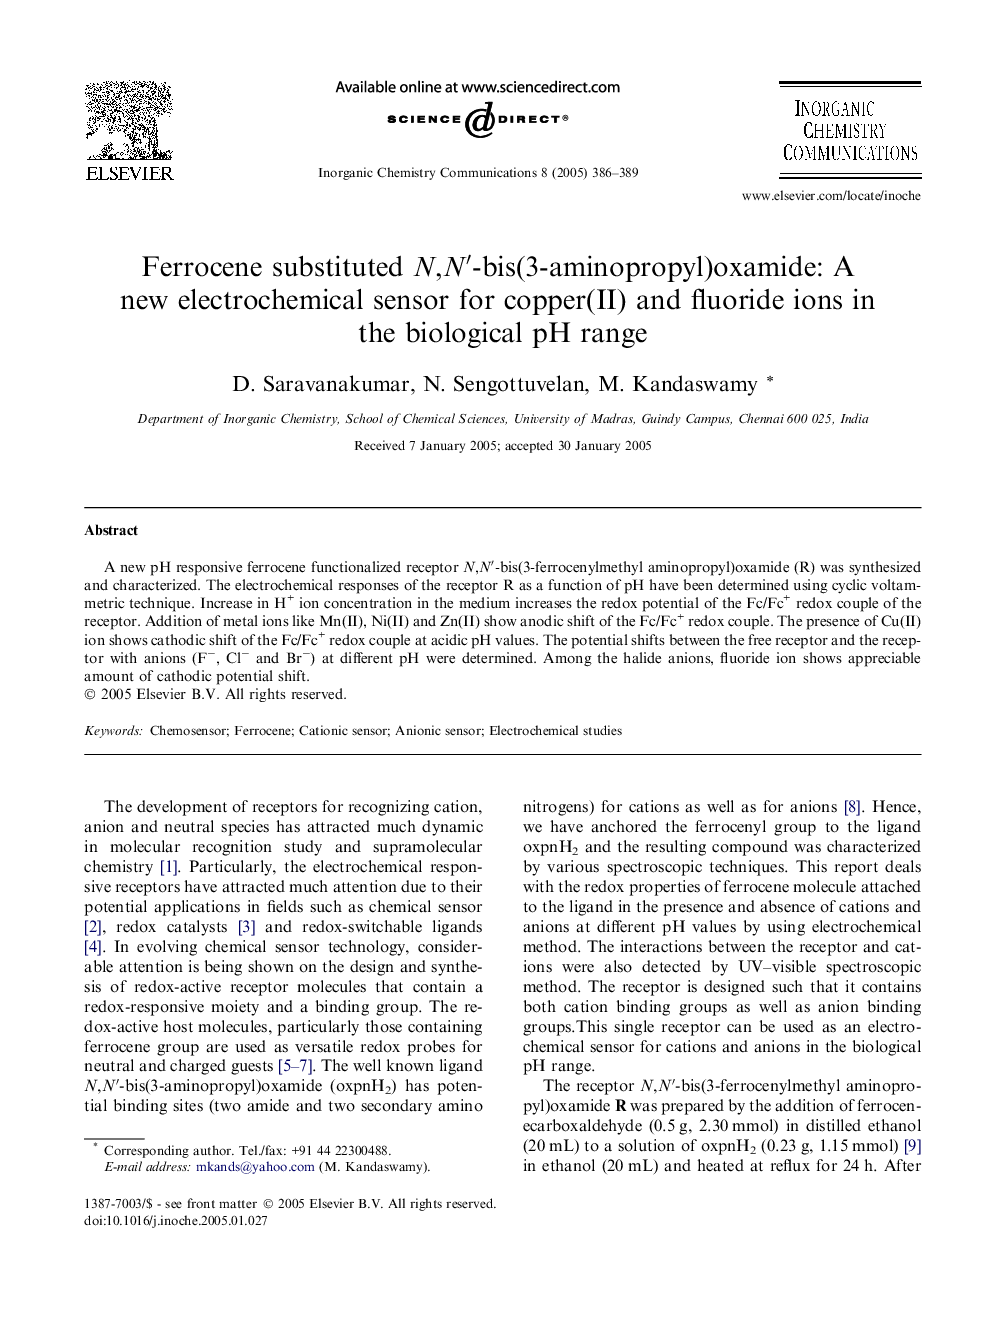 Ferrocene substituted N,Nâ²-bis(3-aminopropyl)oxamide: A new electrochemical sensor for copper(II) and fluoride ions in the biological pH range